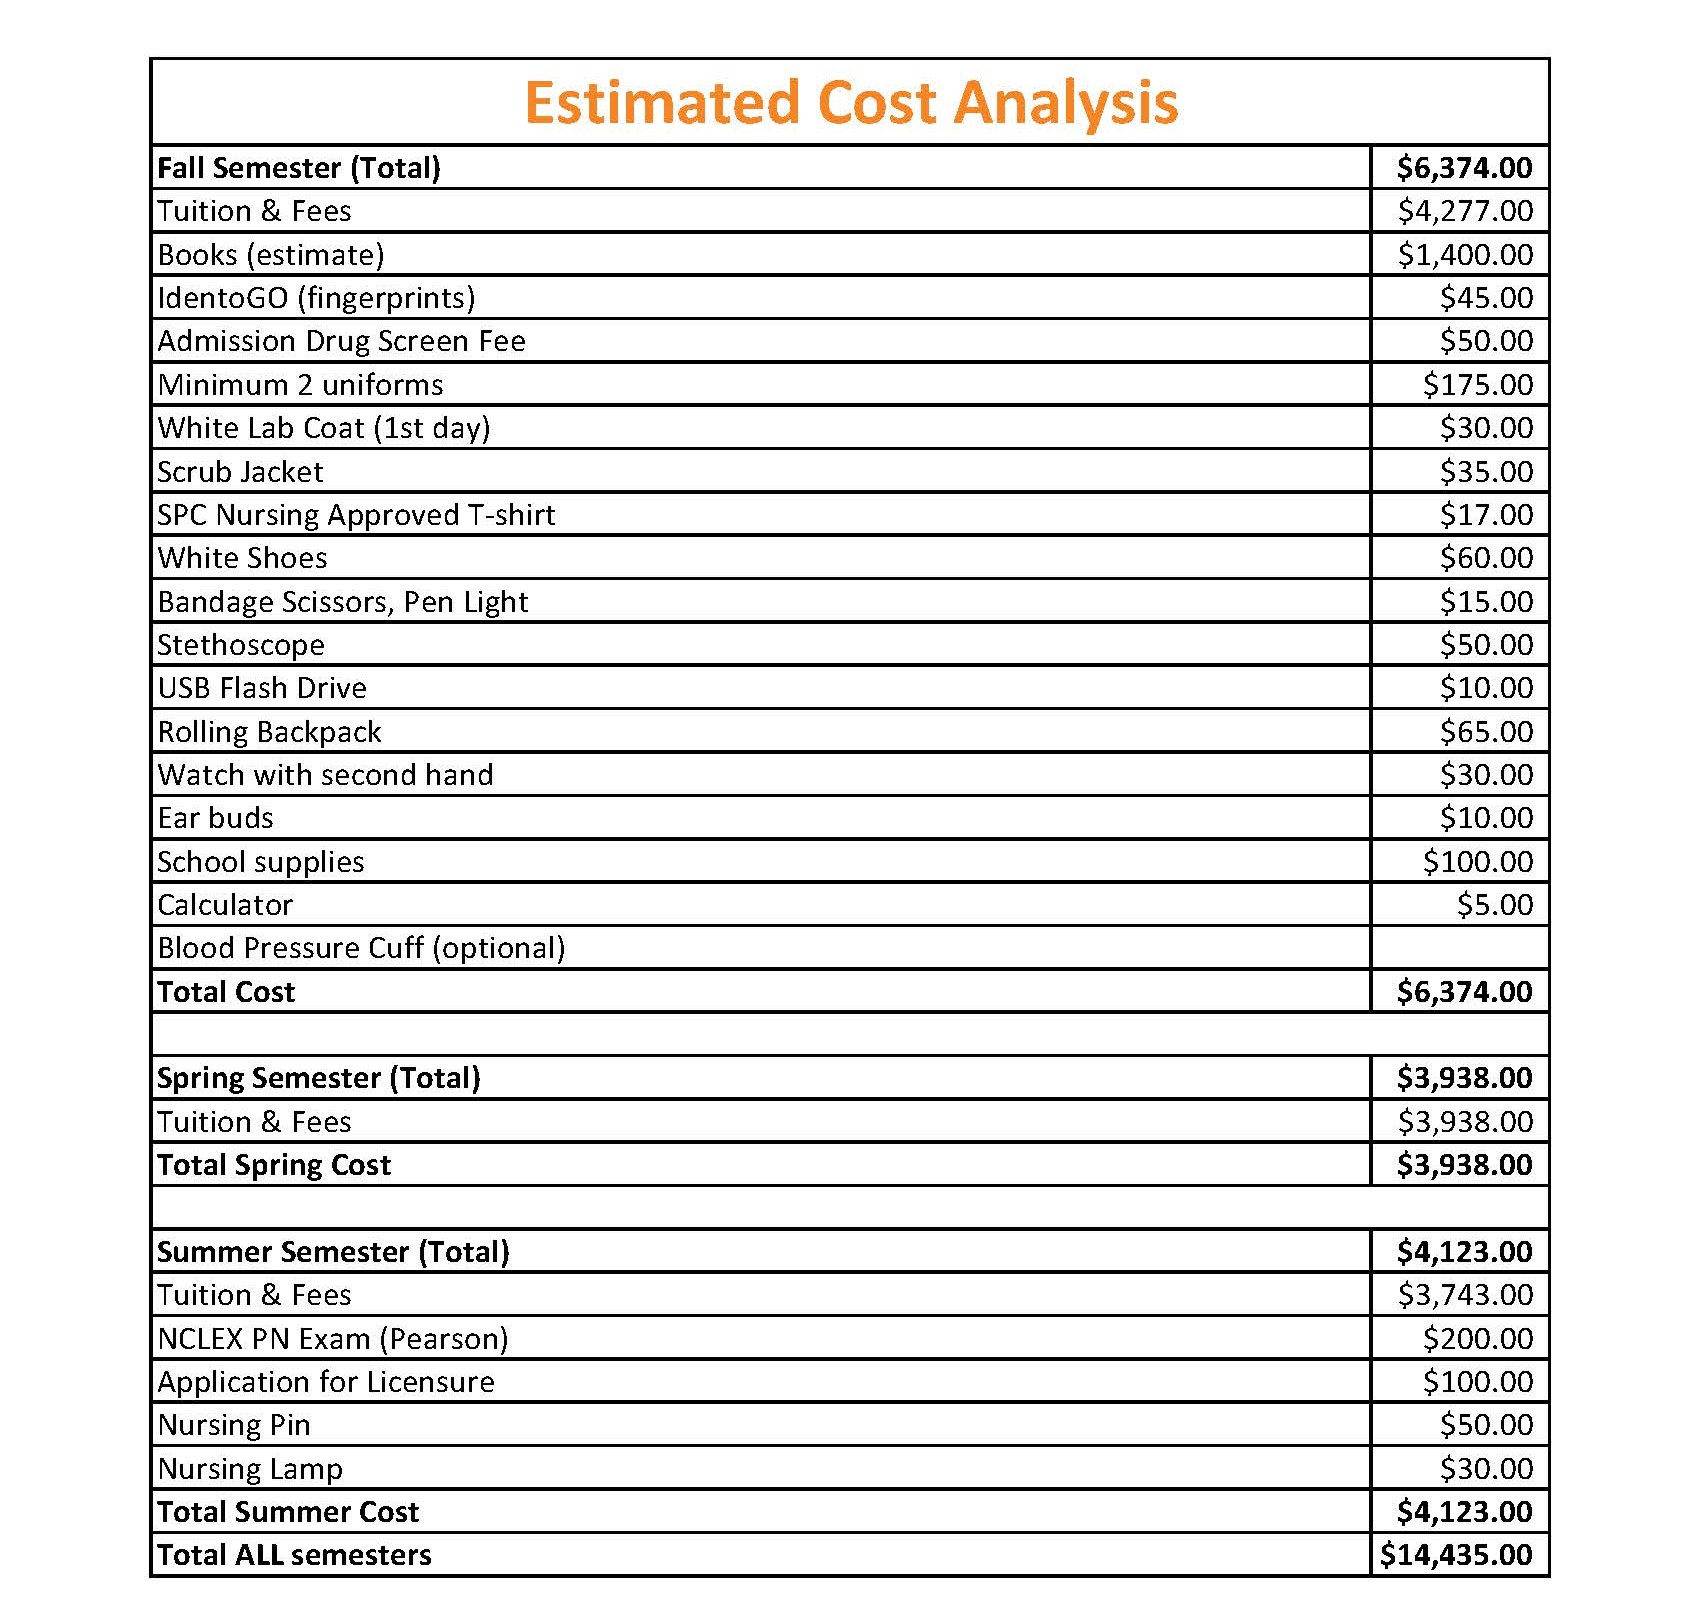 Plainview VN Program Estimated Cost